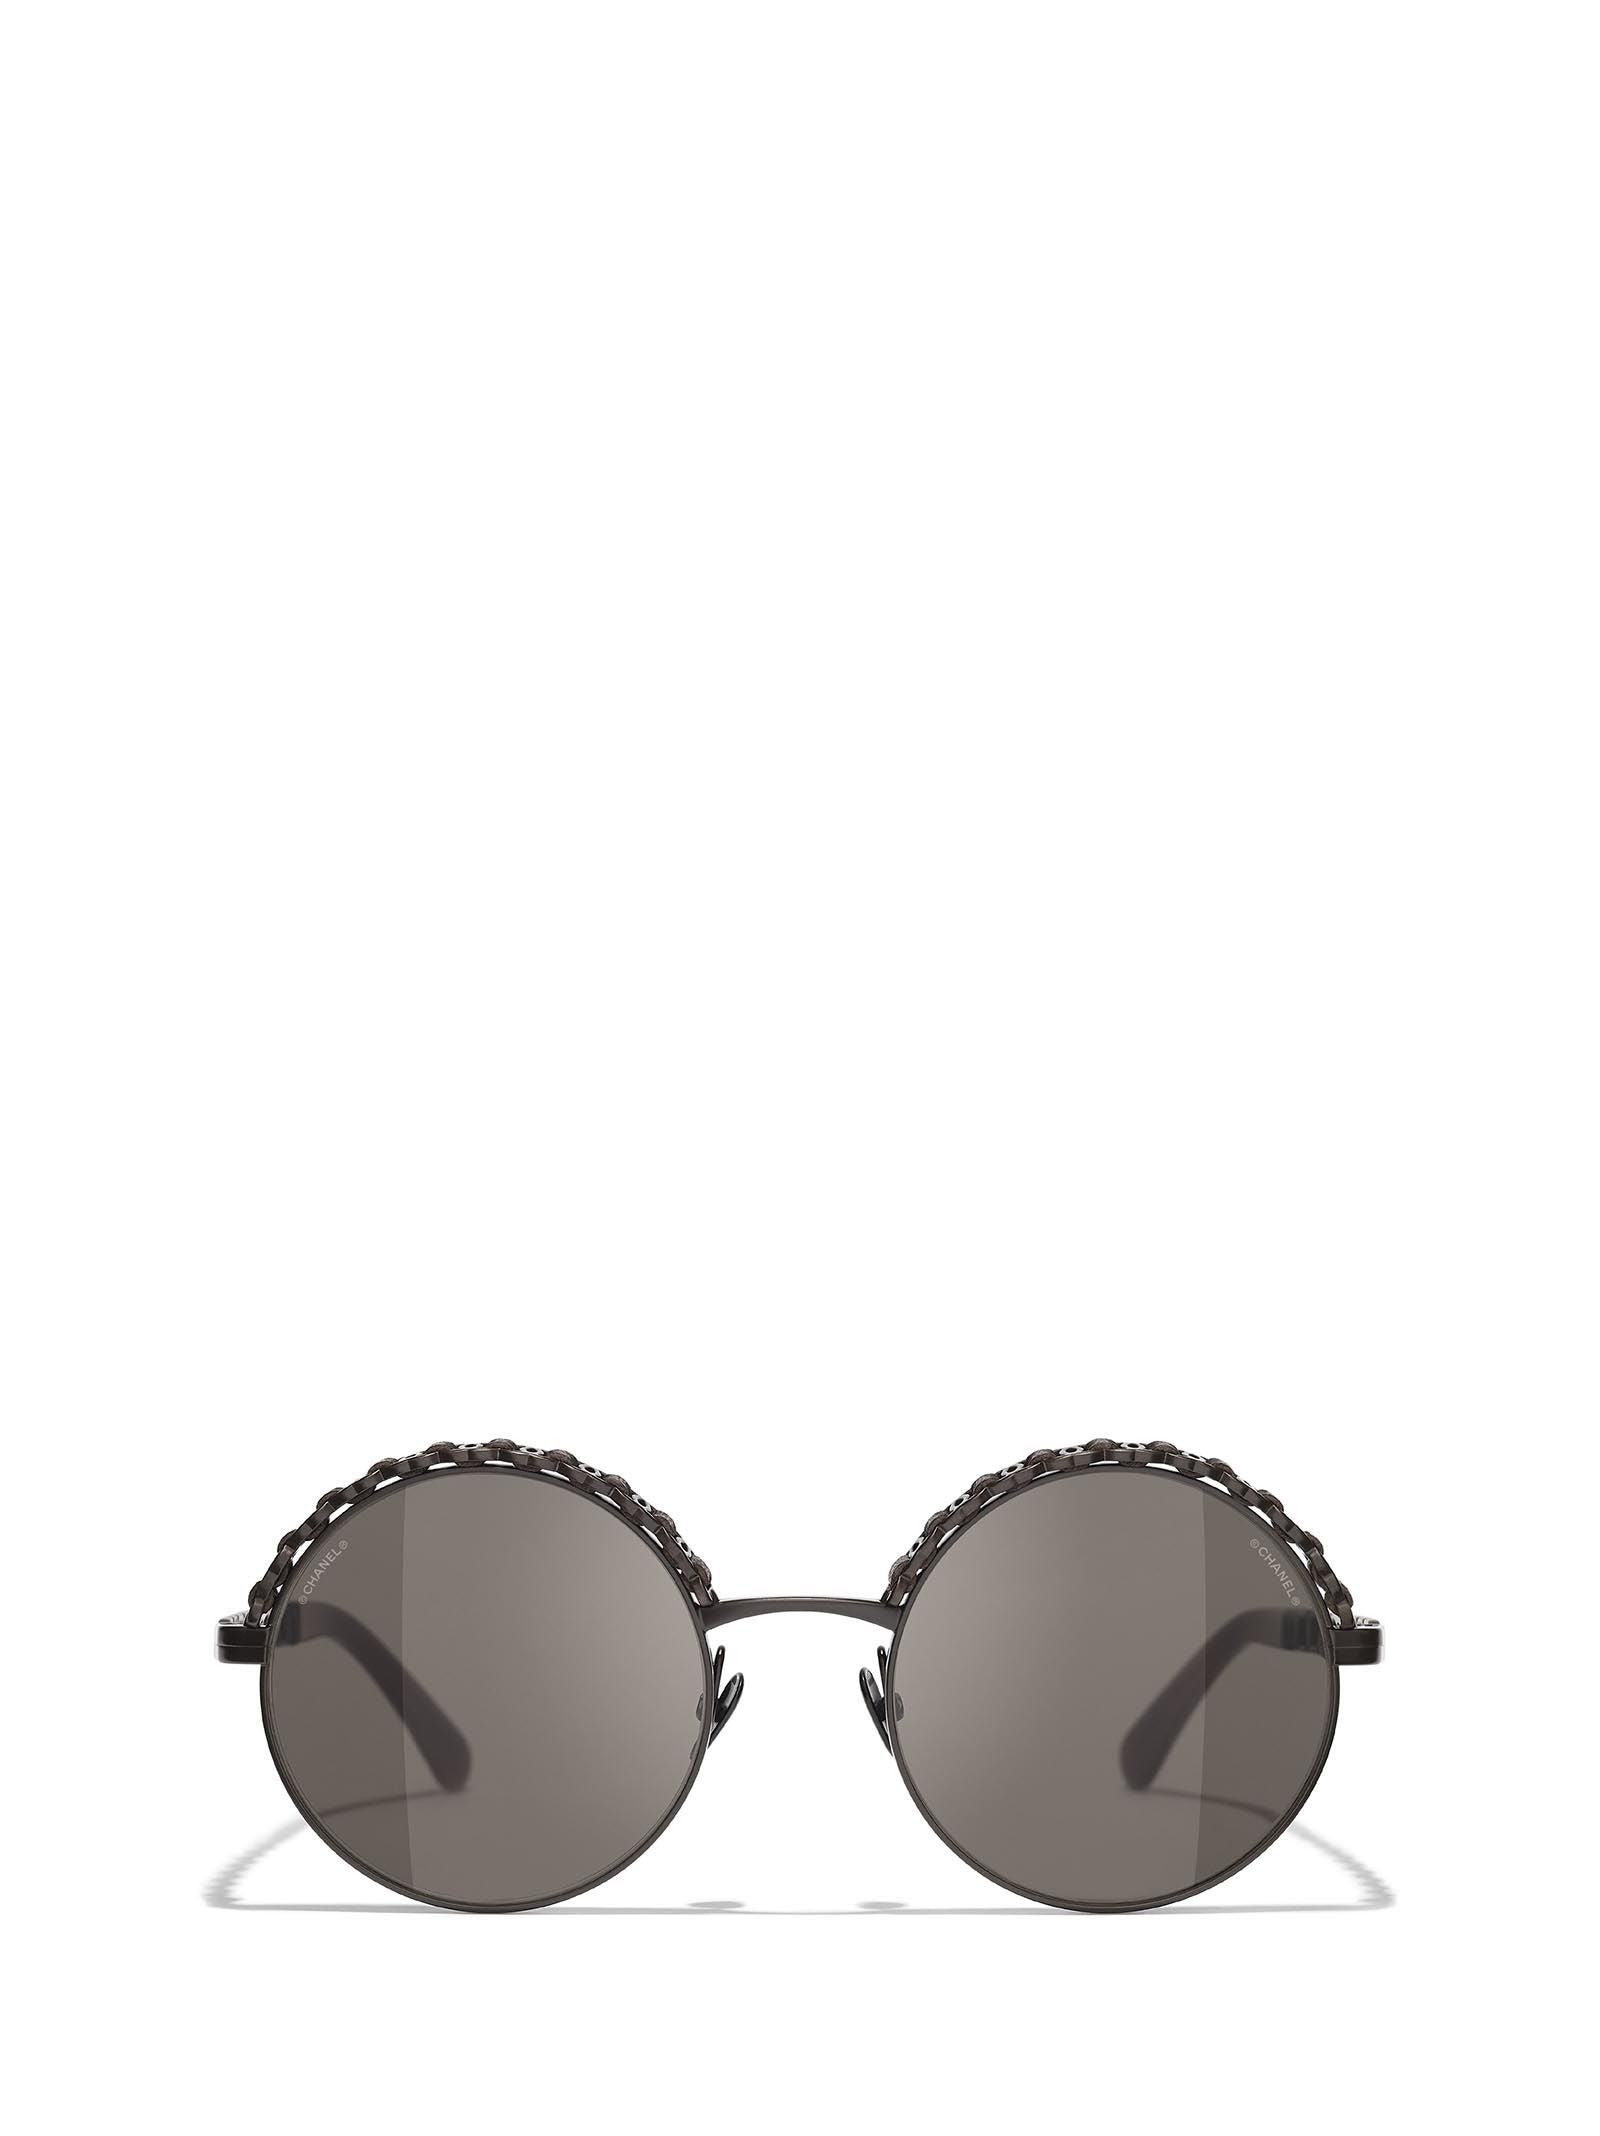 Chanel Round Frame Sunglasses Black | Lyst